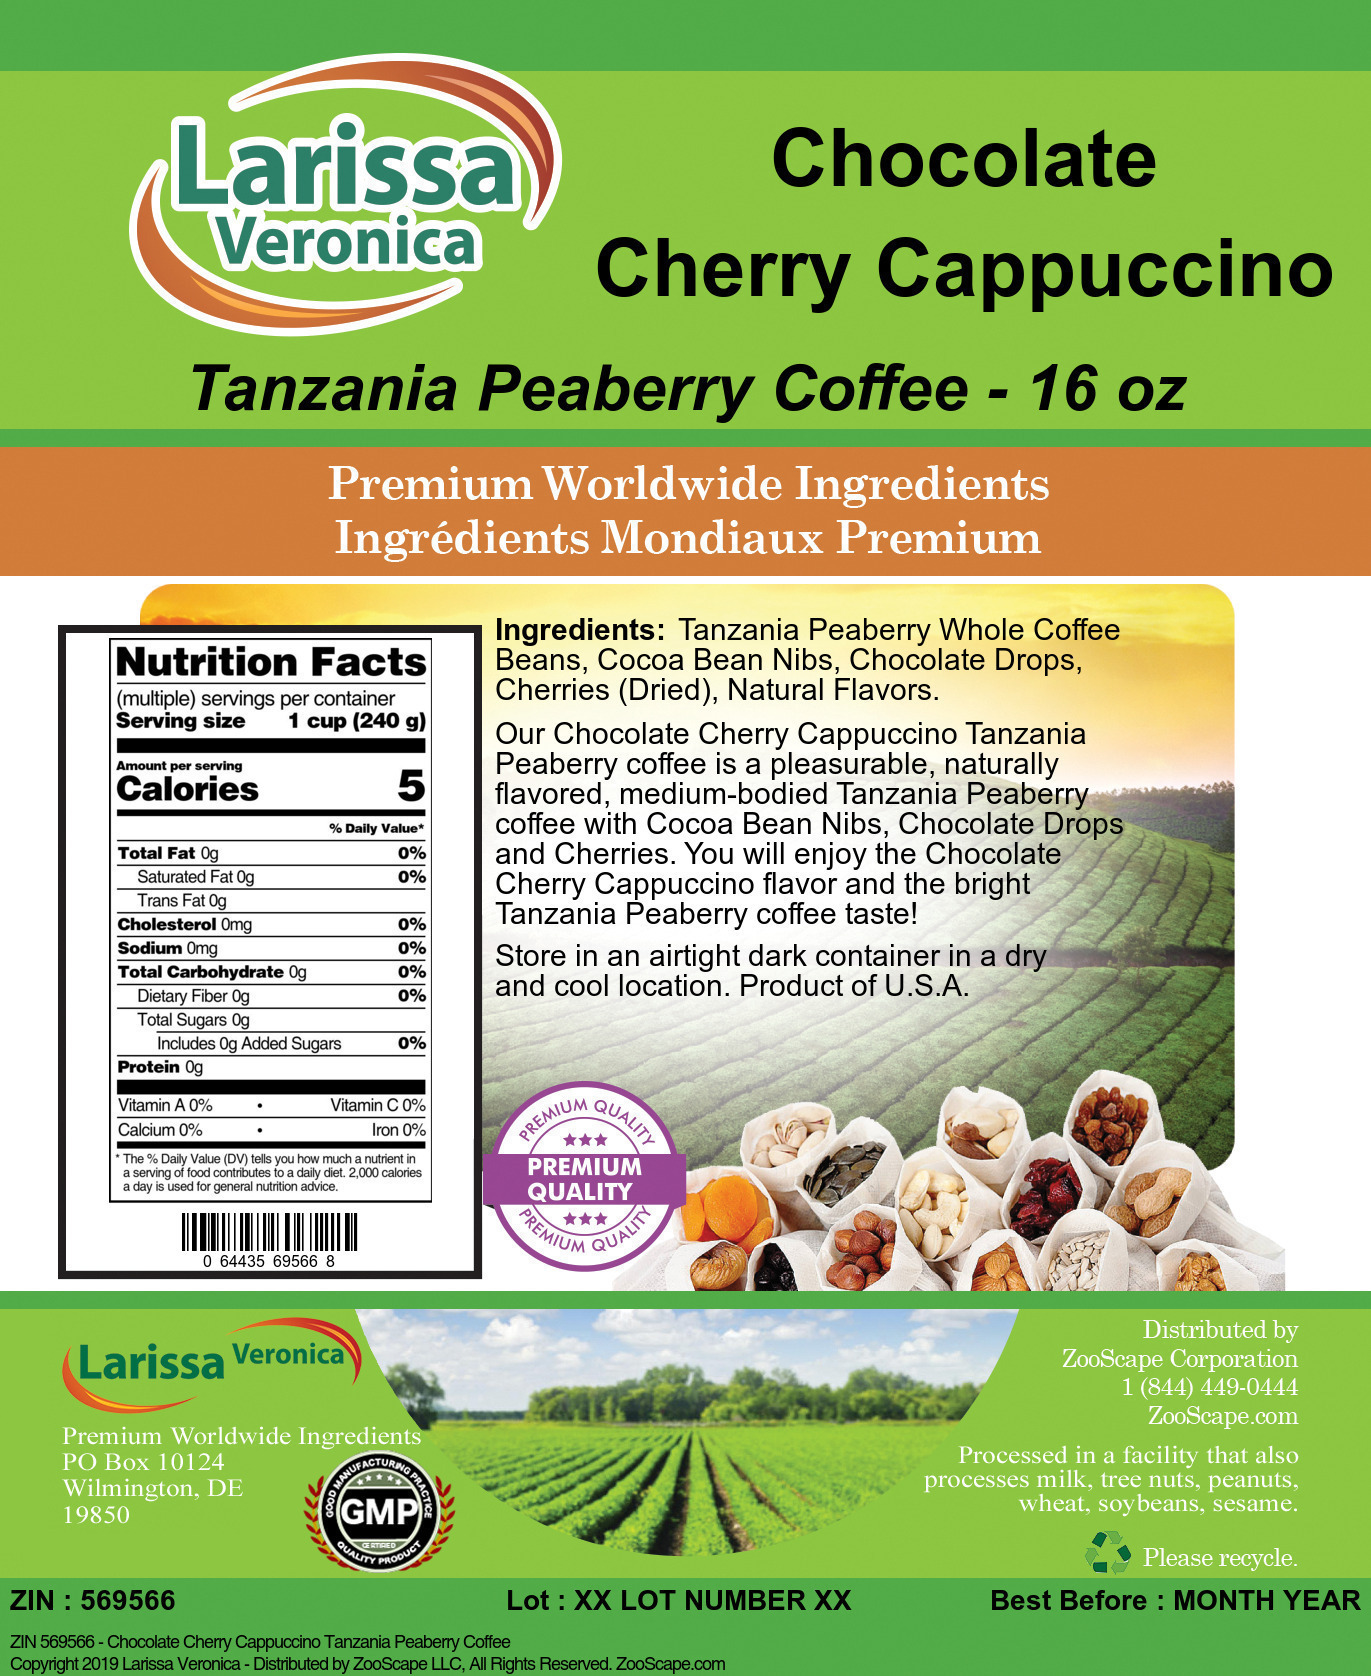 Chocolate Cherry Cappuccino Tanzania Peaberry Coffee - Label